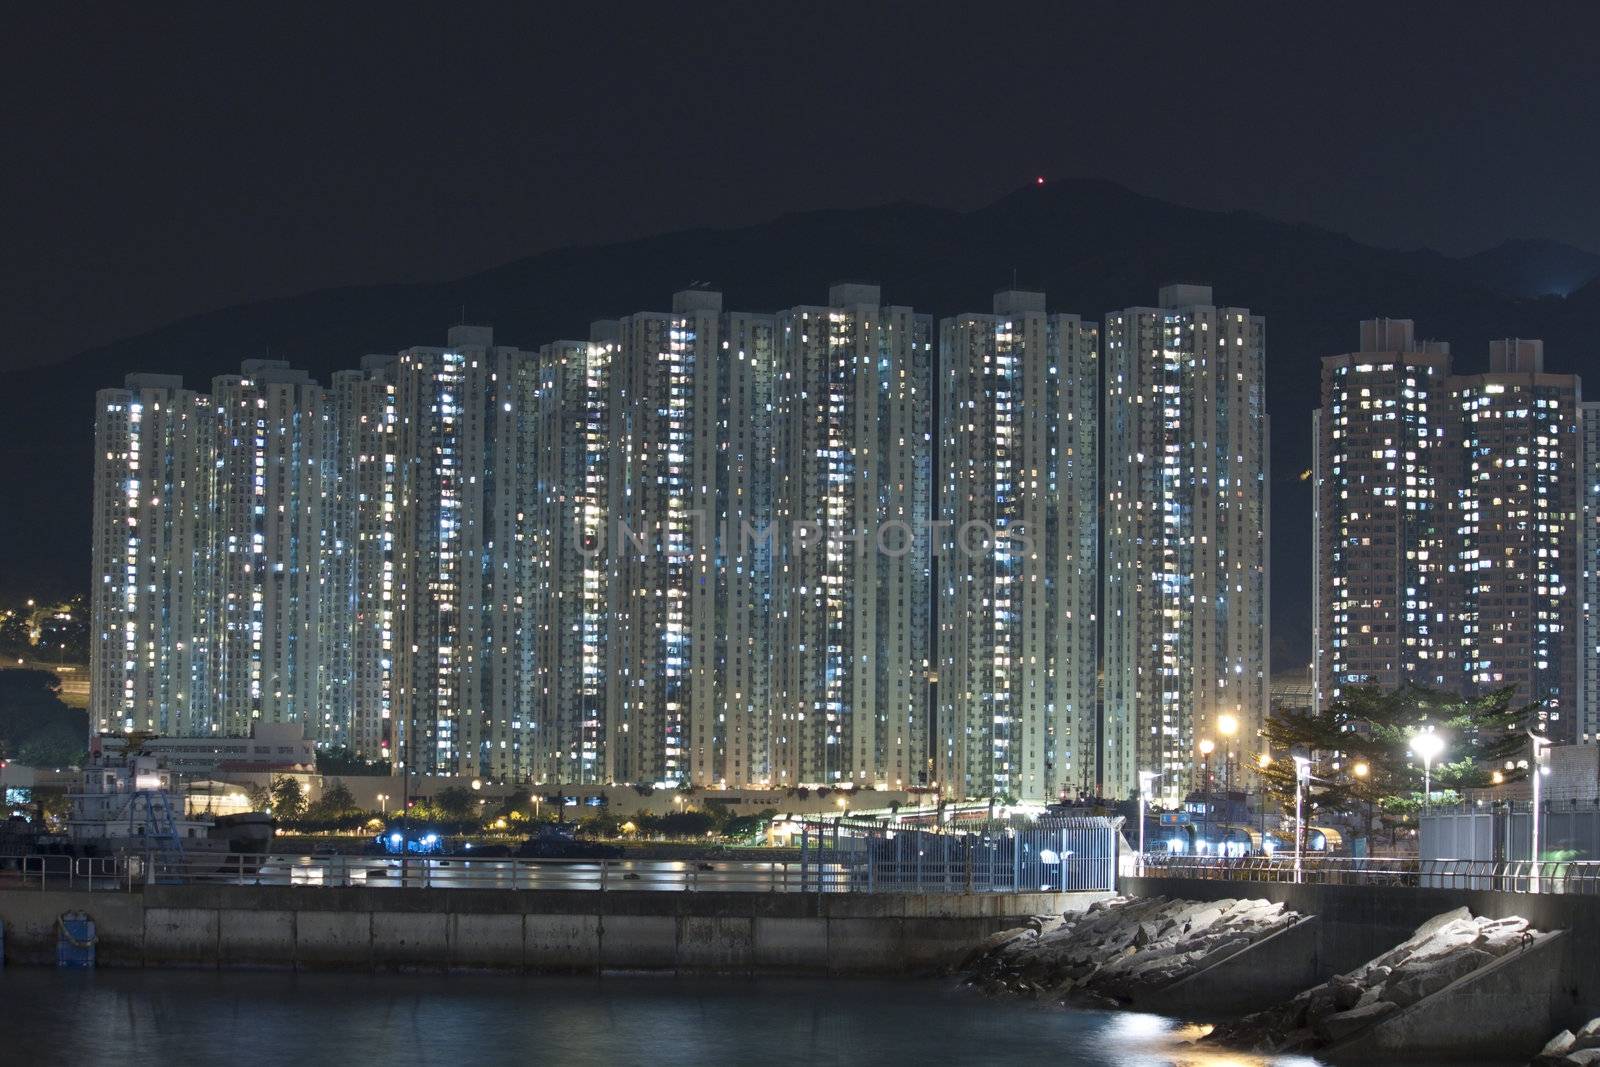 Hong Kong apartment blocks at night, showing the packed conditio by kawing921